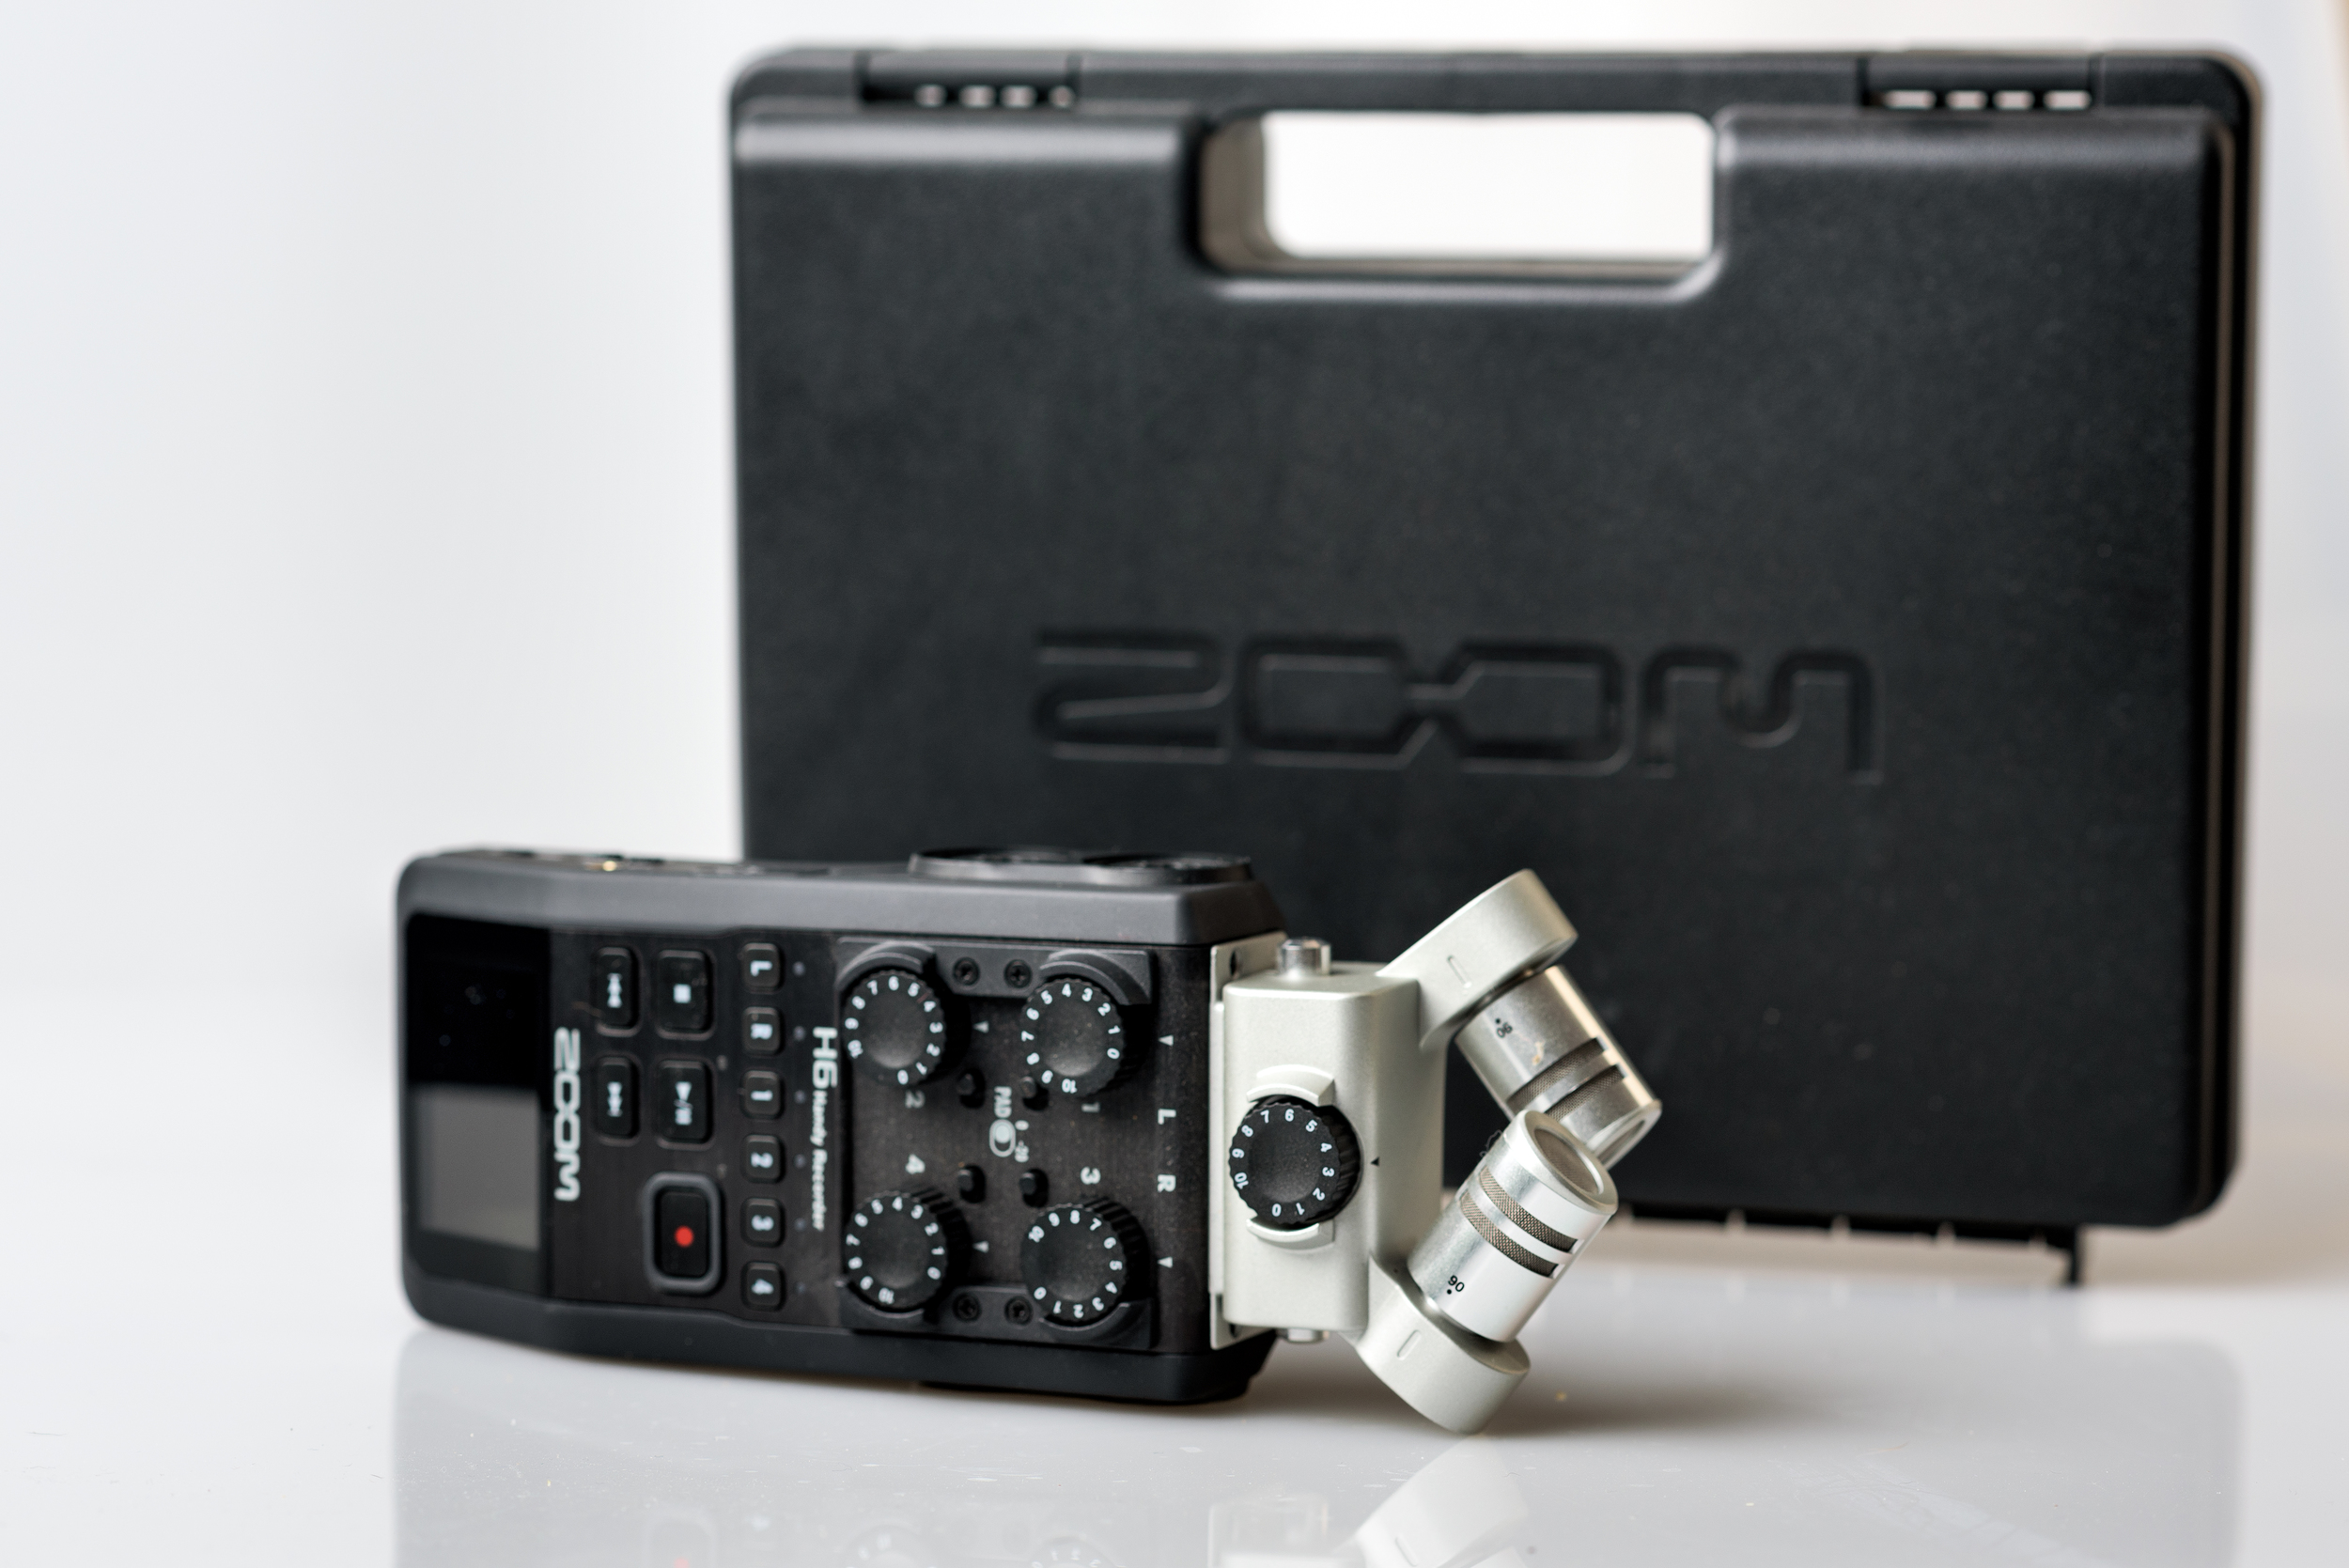 Zoom H6 handy recorder